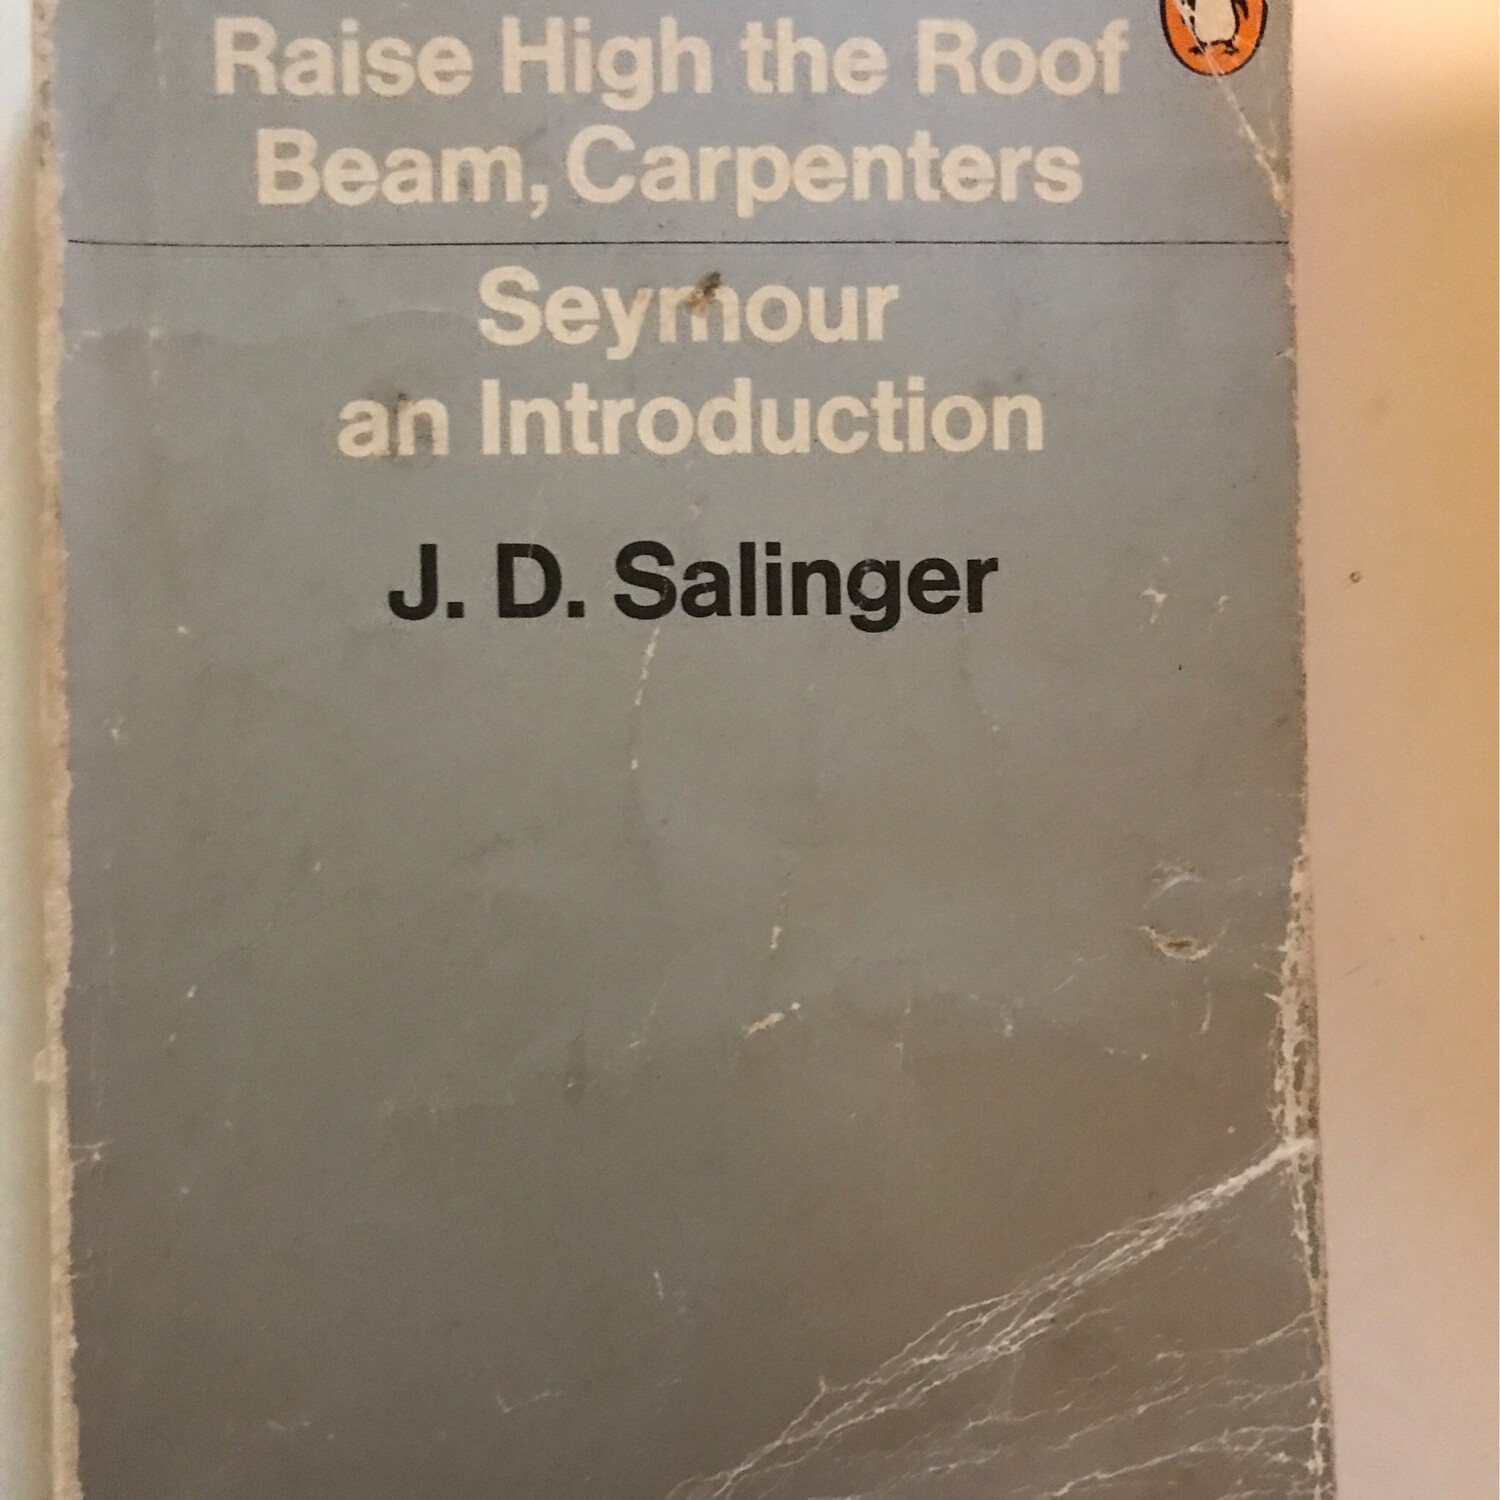 Raise High The Roof Beam, Carpenters J. D. Salinger